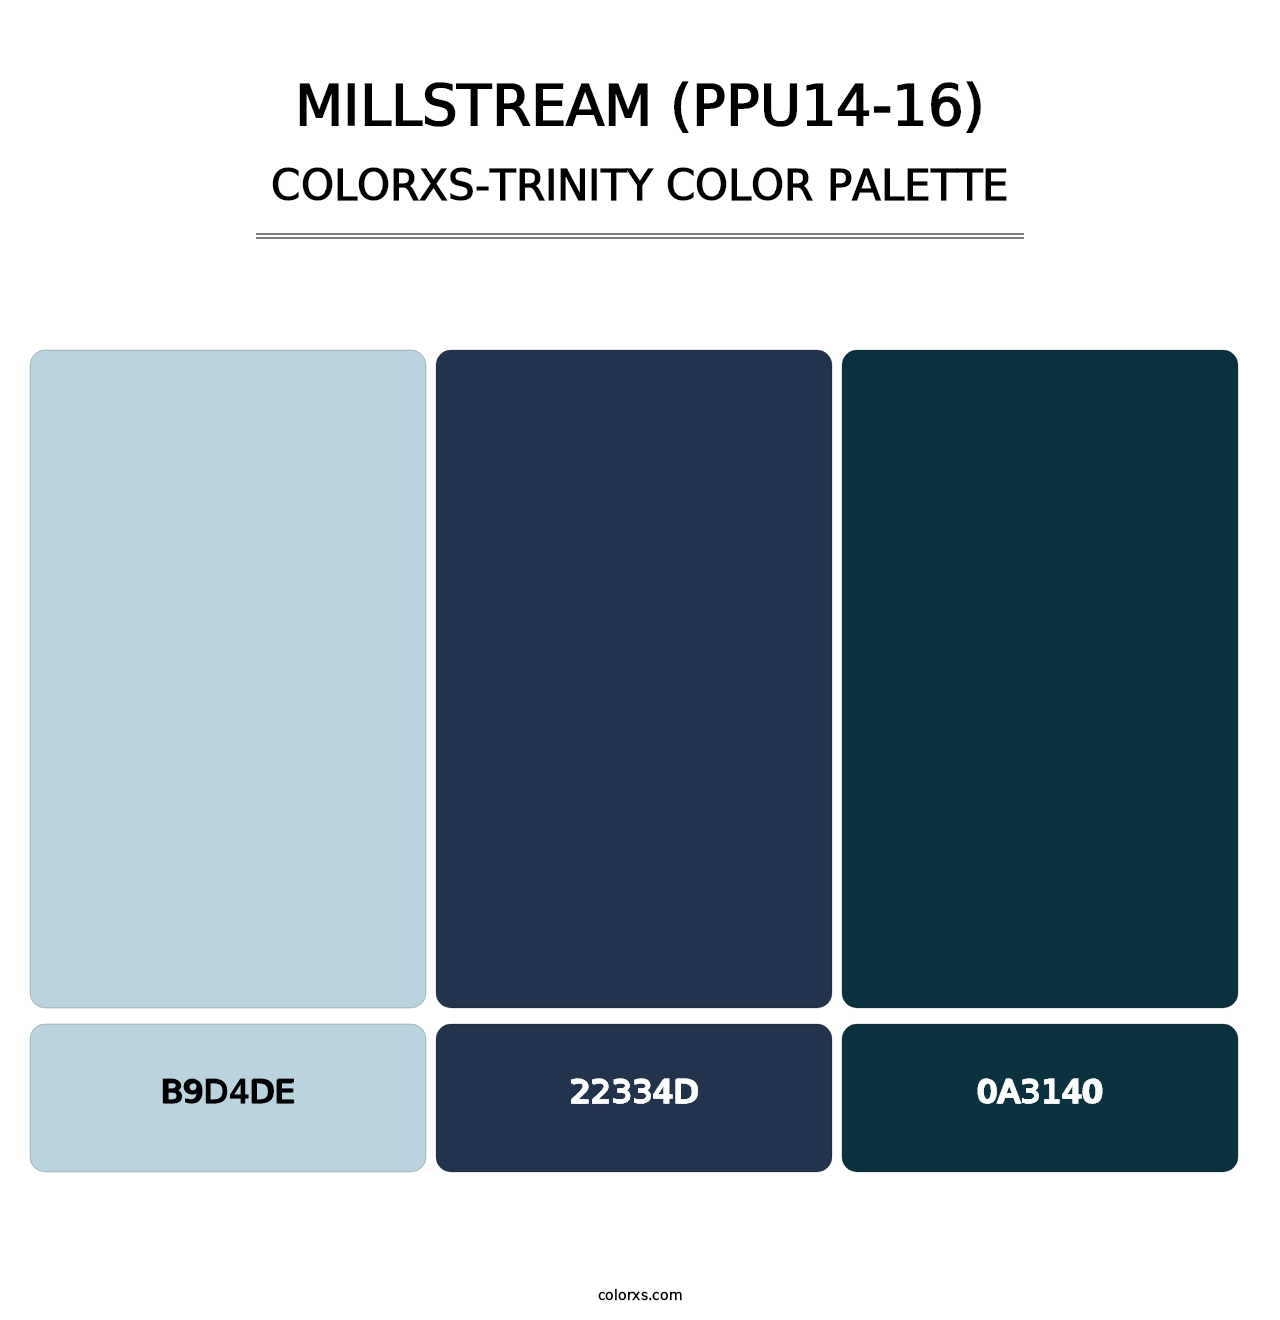 Millstream (PPU14-16) - Colorxs Trinity Palette